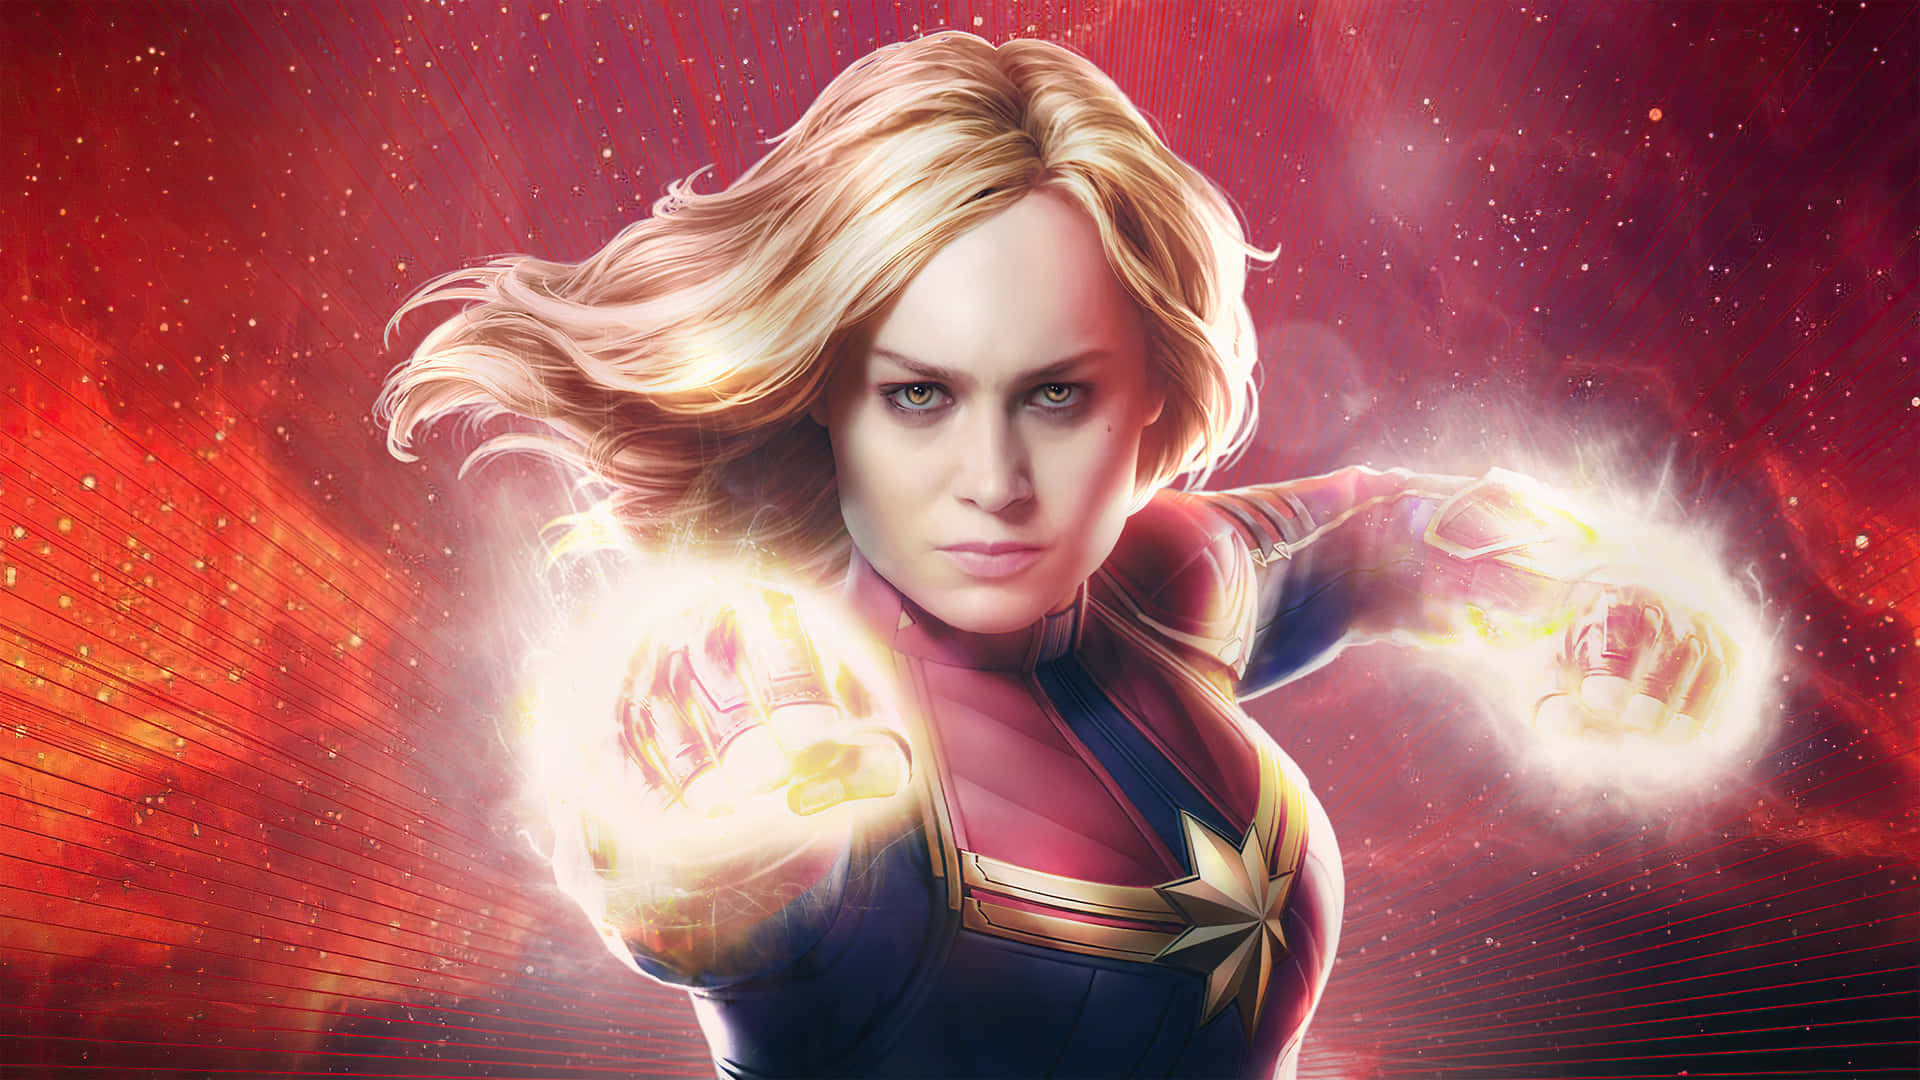 Brie Larson As Captain Marvel In Her High-definition Wallpapaer